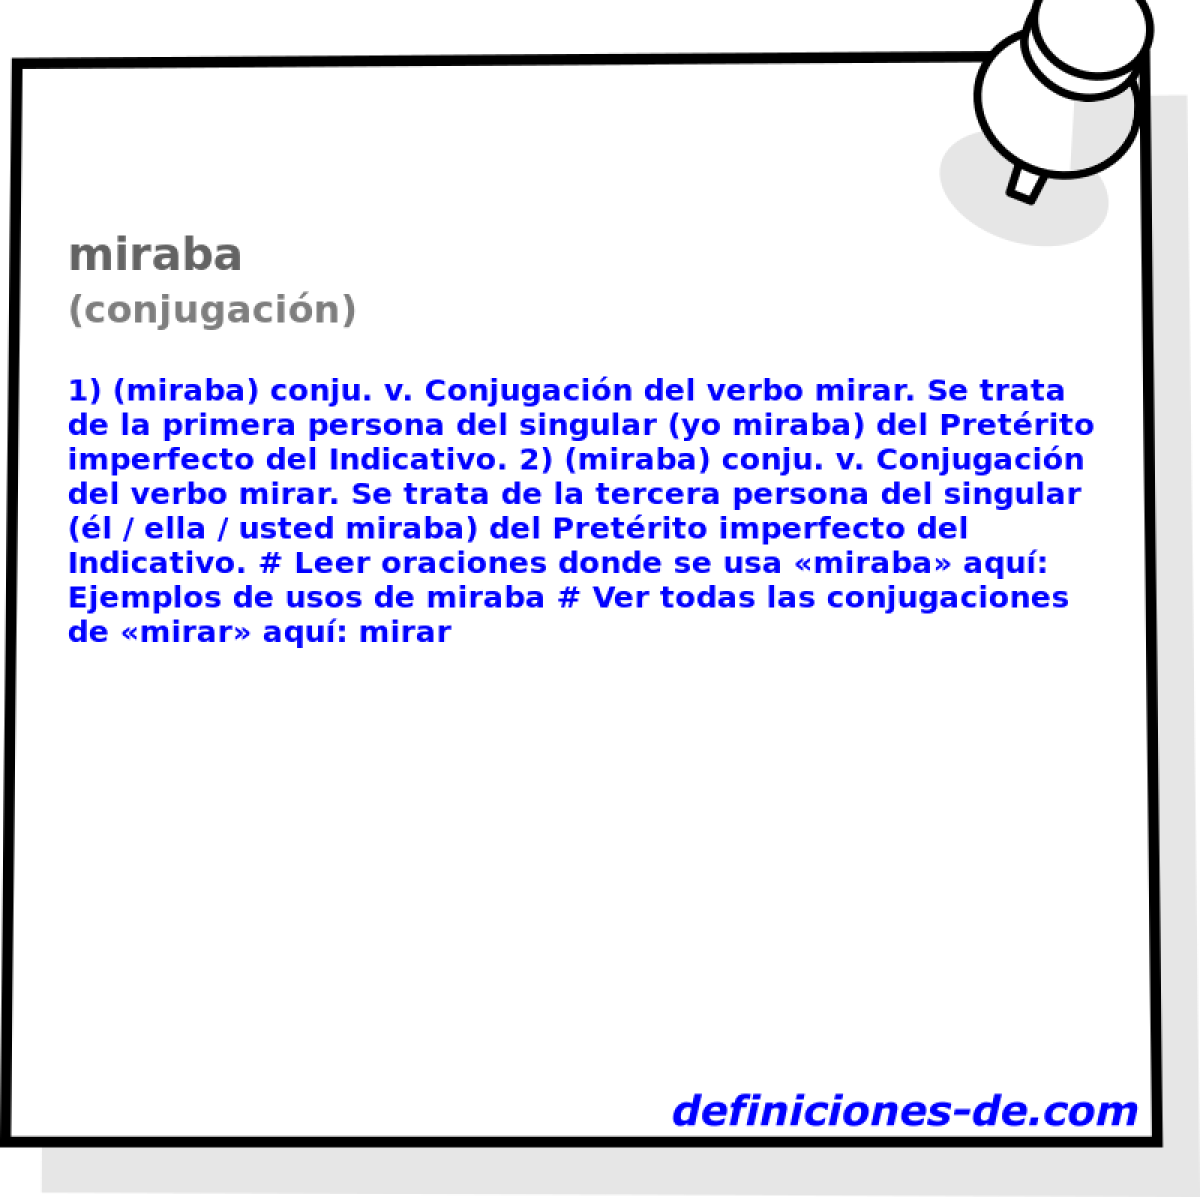 miraba (conjugacin)